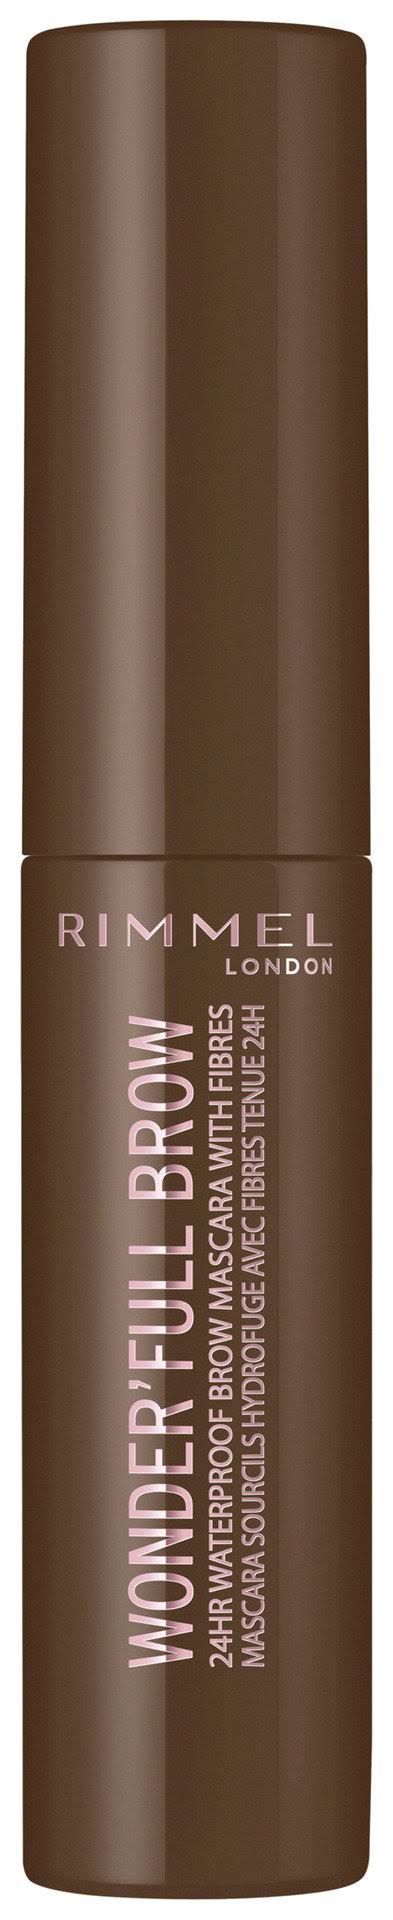 Rimmel London Wonder'full 24 Hour Brow Mascara - 002 Medium Brown